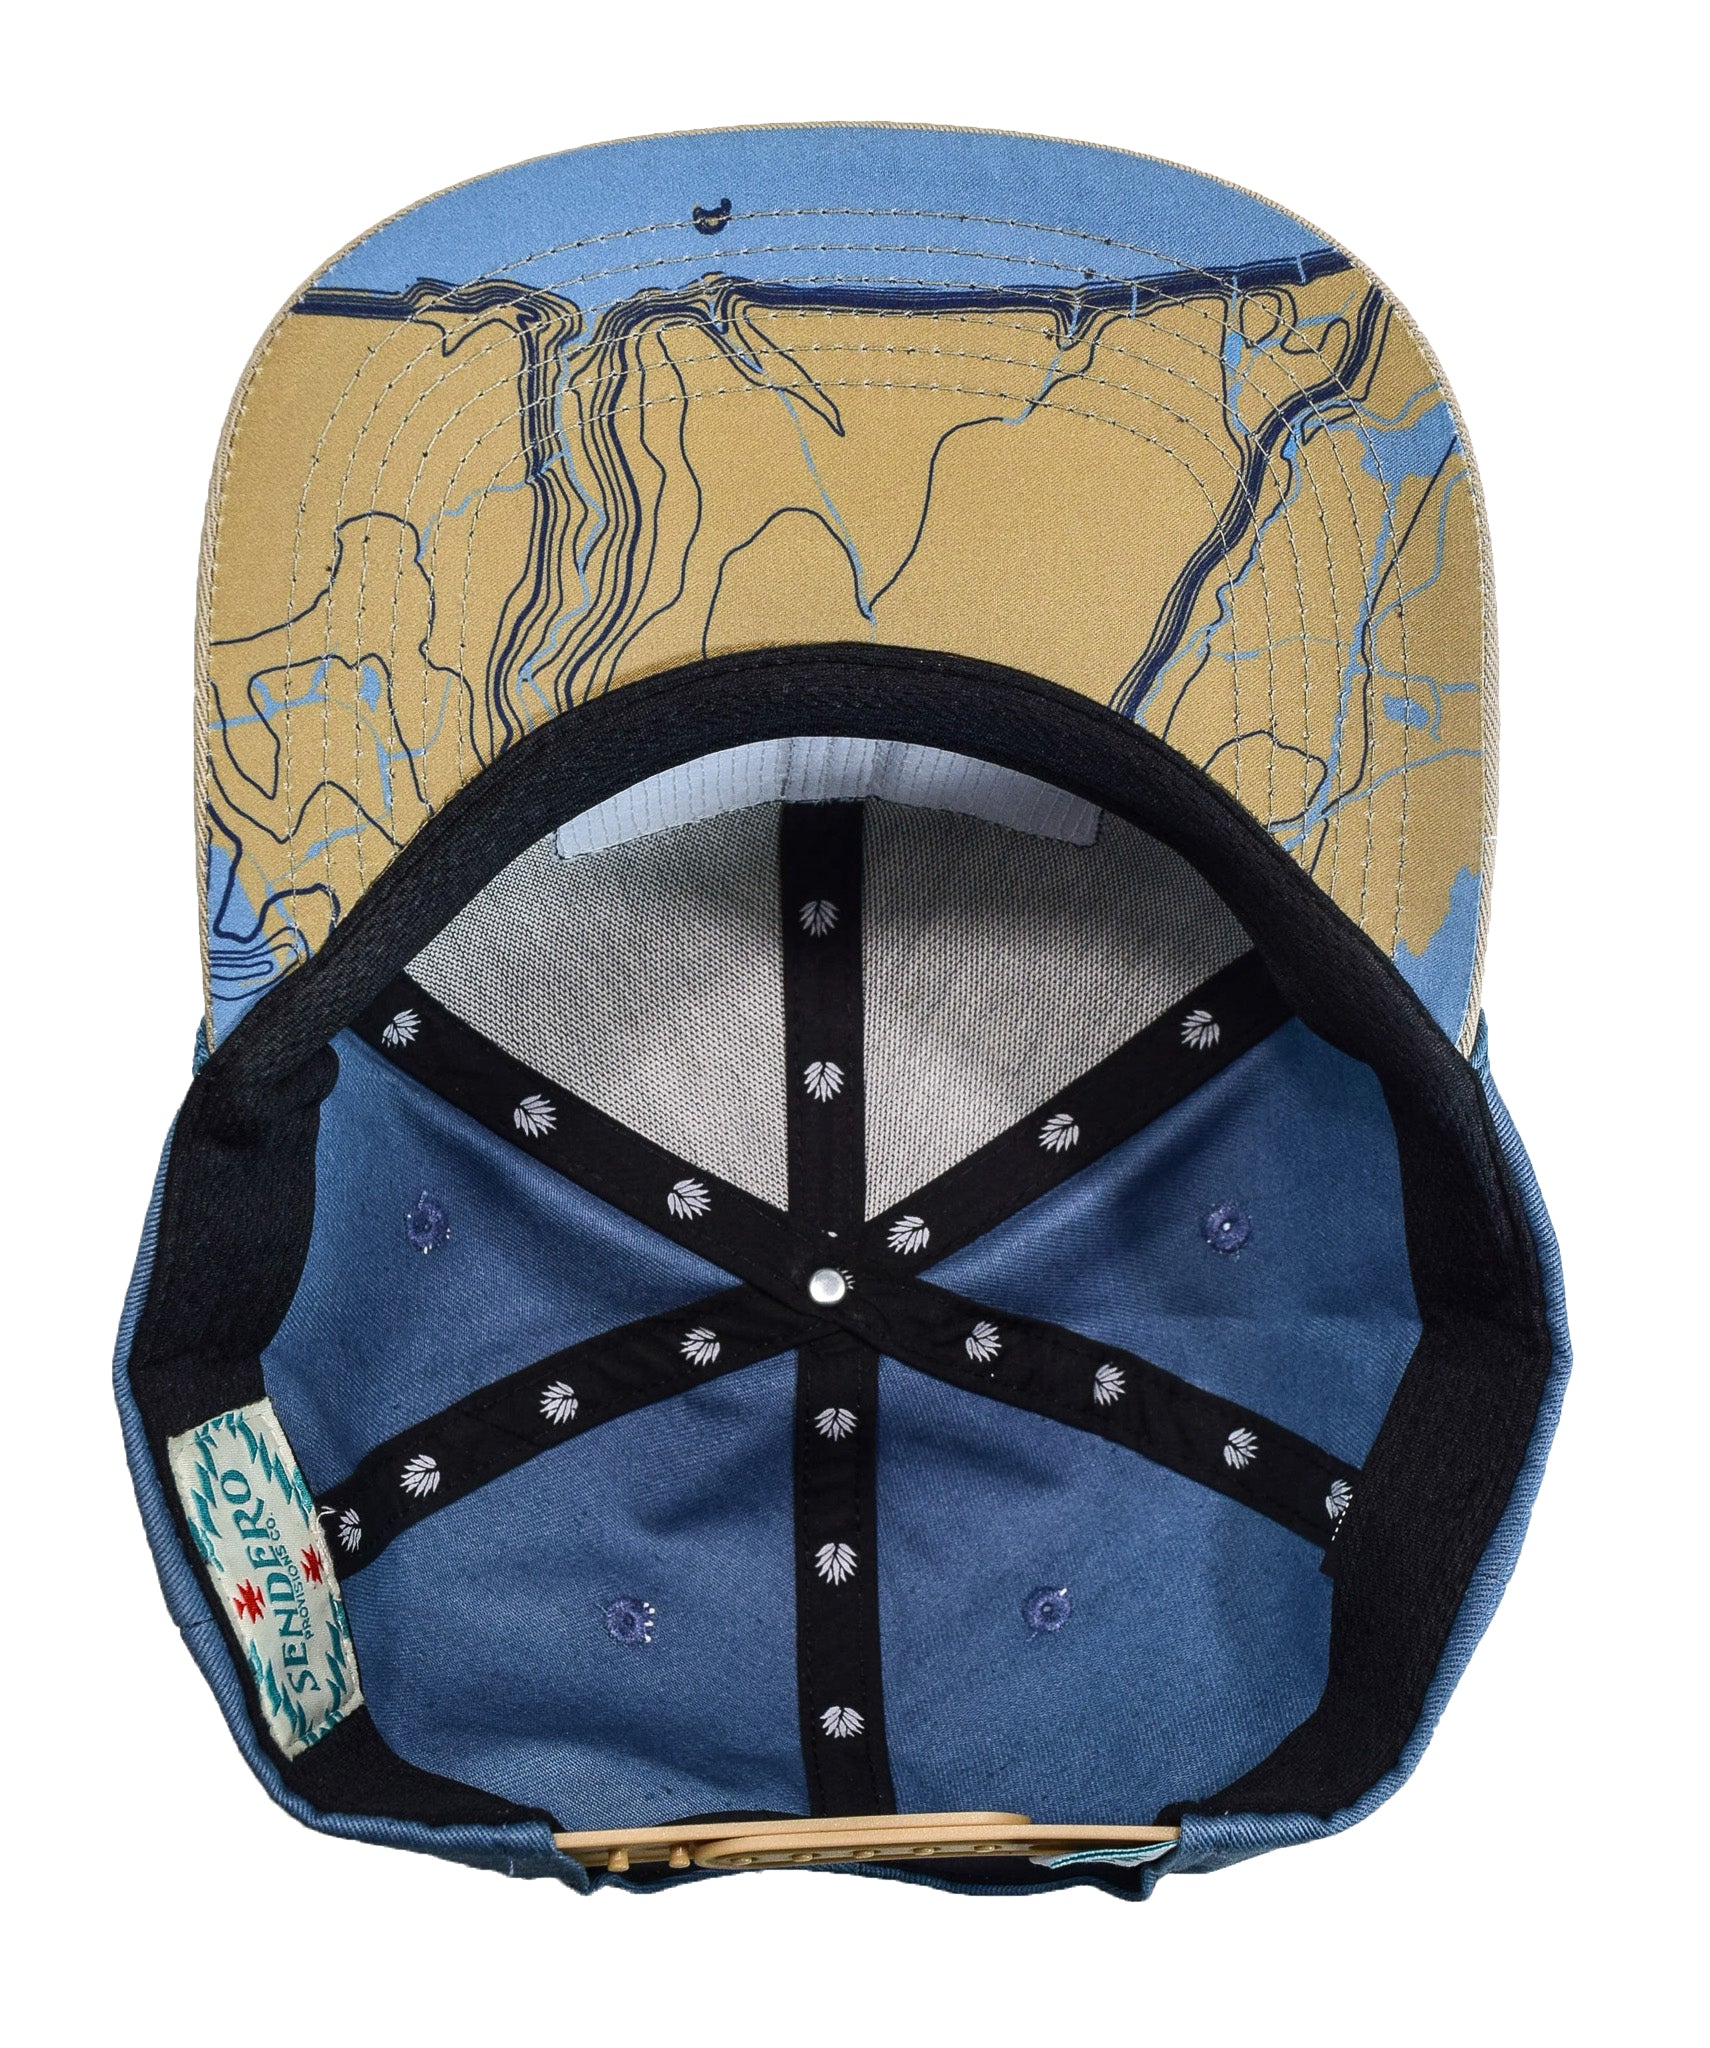 Sendero Provisions Co. Olympic National Park Braided Snapback Hat (Steel Blue)